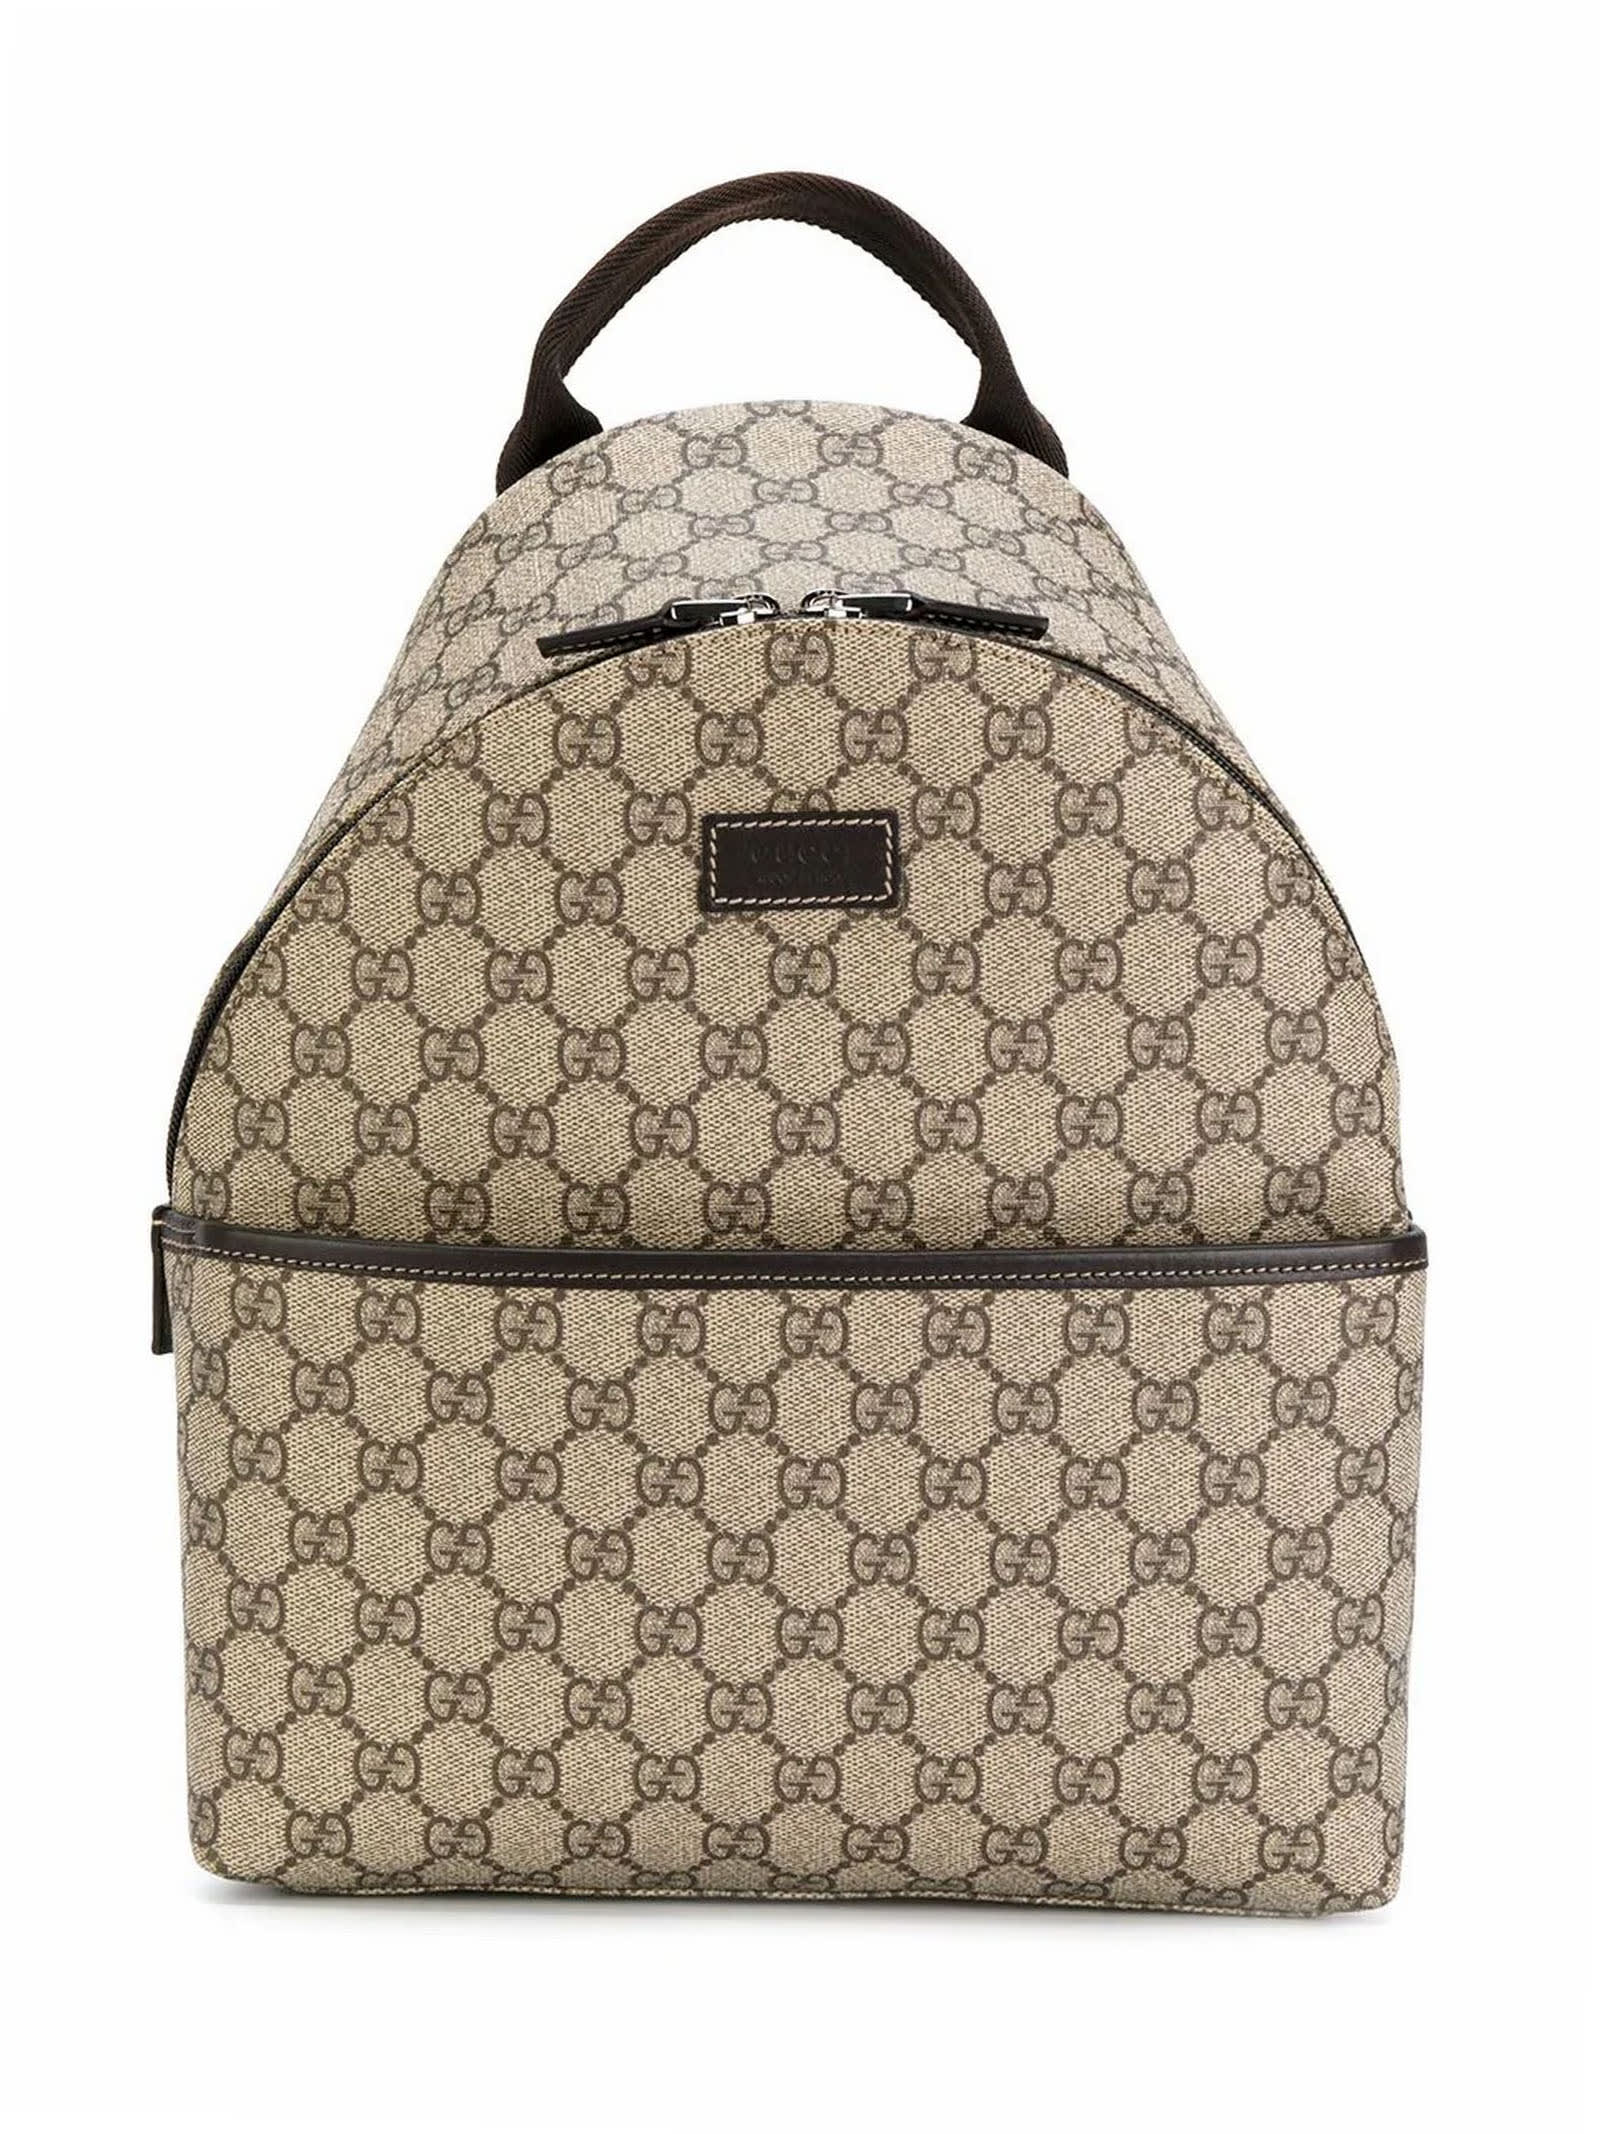 Gucci Childrens Gg Supreme Backpack